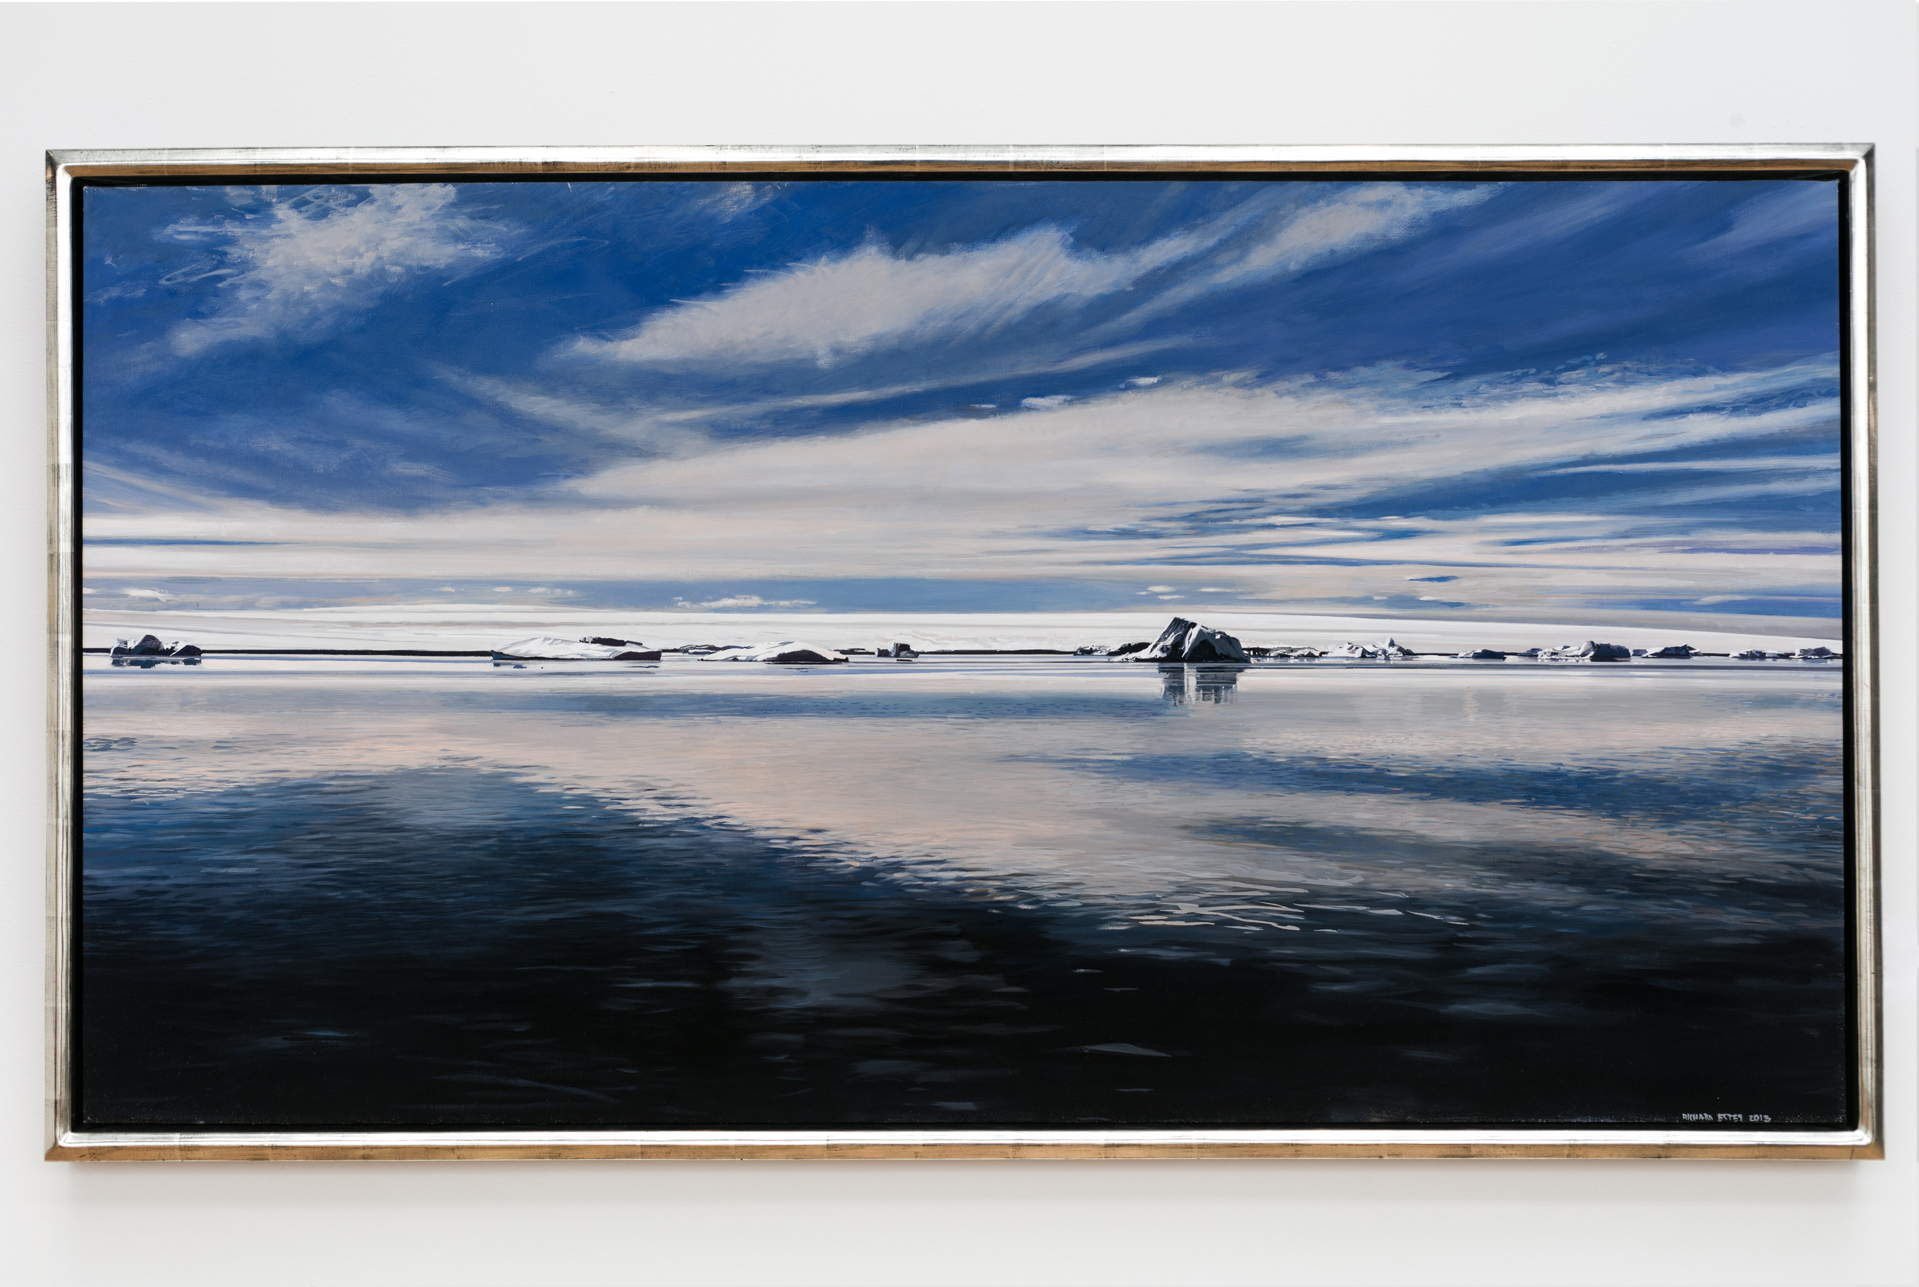 Antarctica by Richard Estes